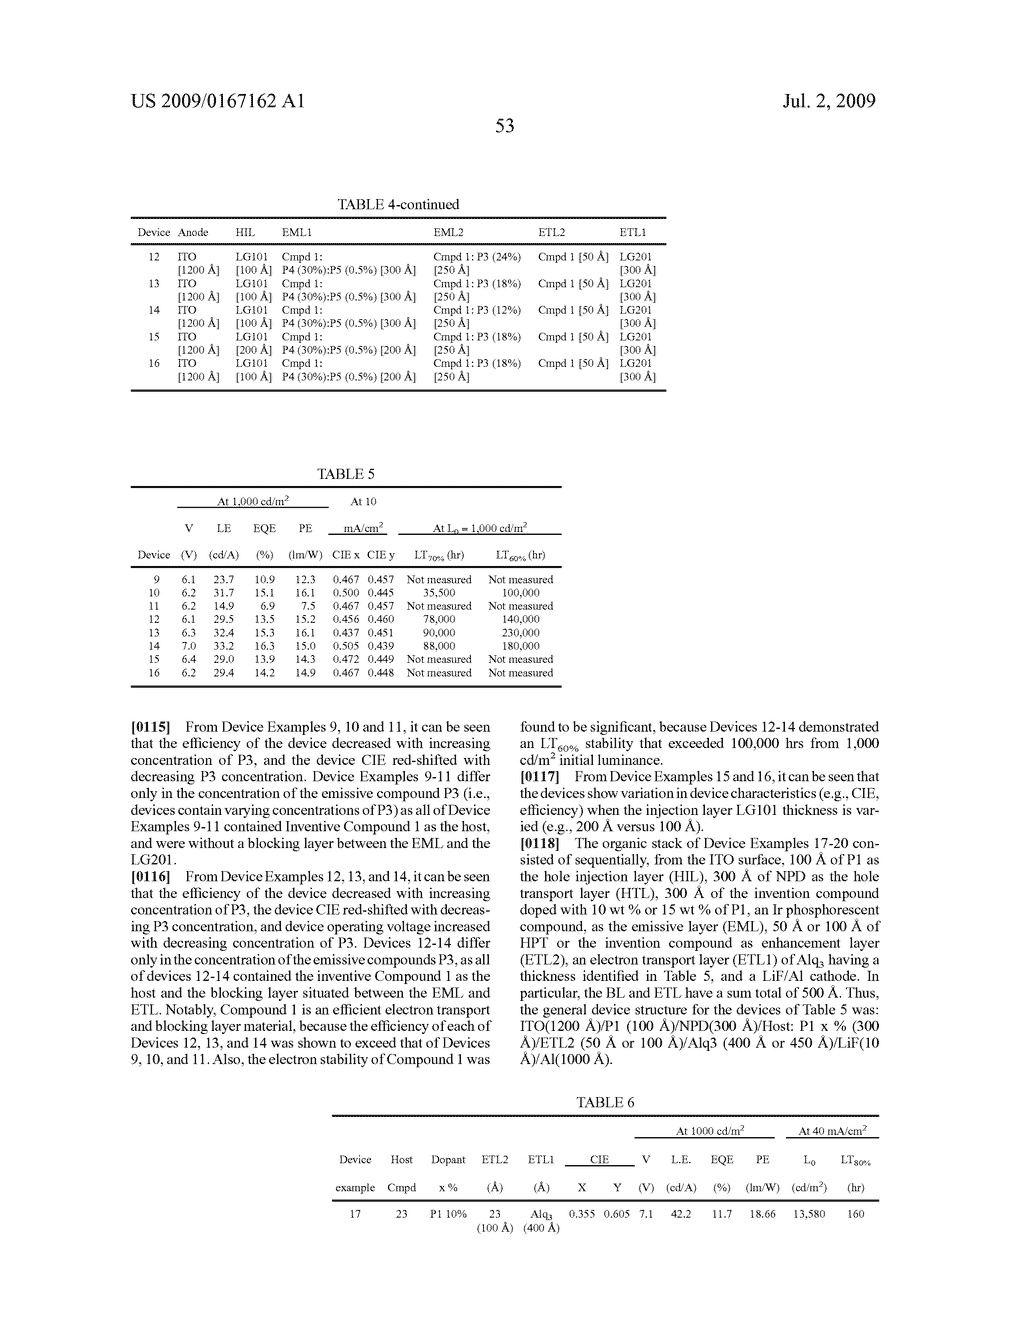 DIBENZOTHIOPHENE-CONTAINING MATERIALS IN PHOSPHORESCENT LIGHT EMITTING DIODES - diagram, schematic, and image 68